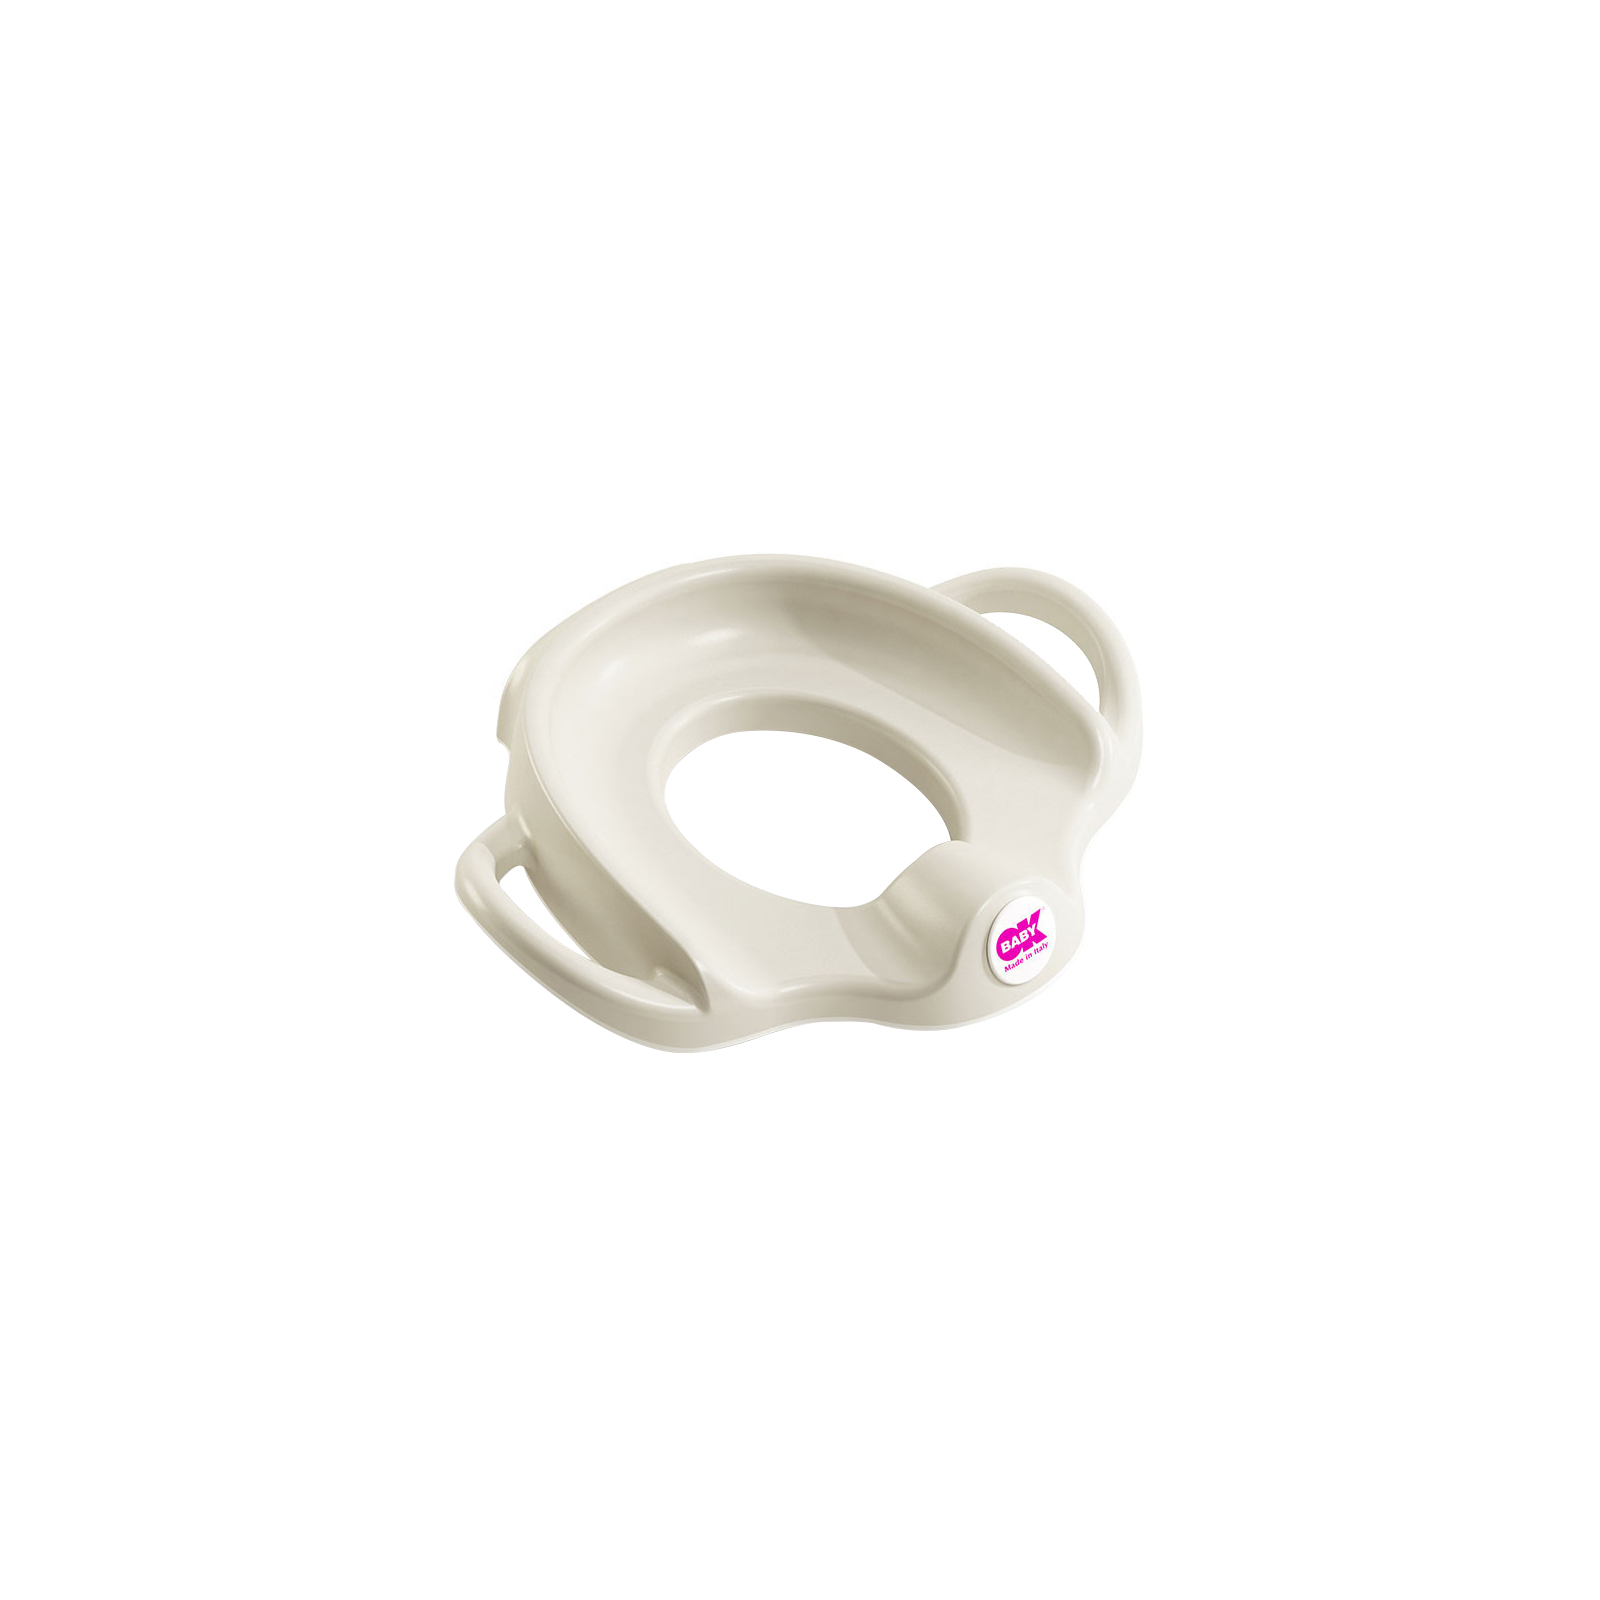 Накладка на унитаз Ok Baby Софа, розовый (39261400)